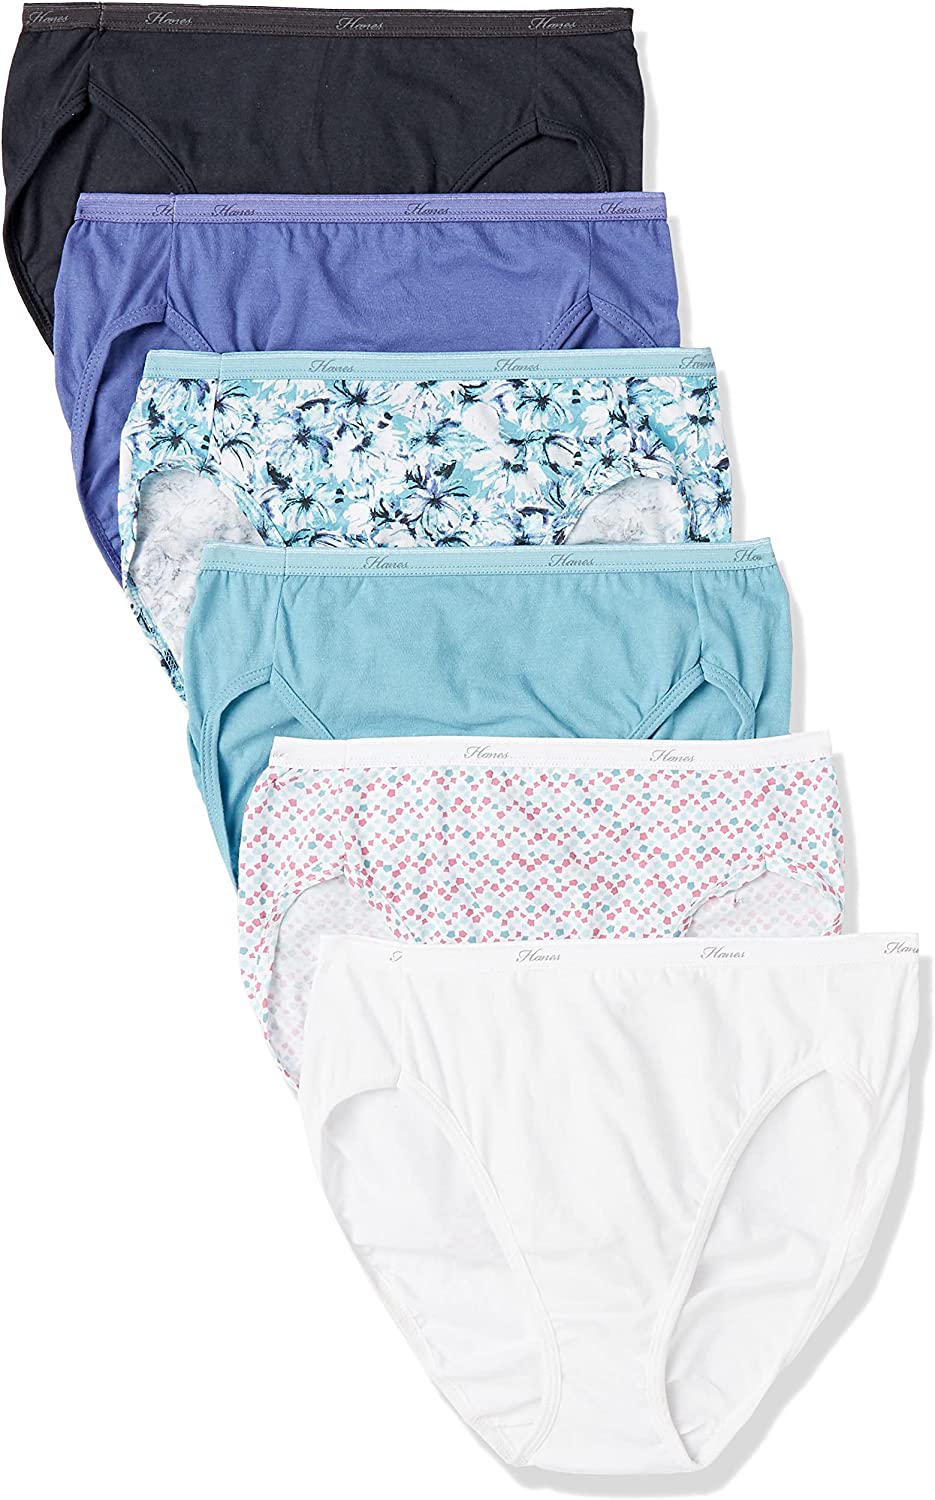 Hanes Nylon Hi-Cut Panties 6-Pack Underwear Assorted Colors Women's Size 8